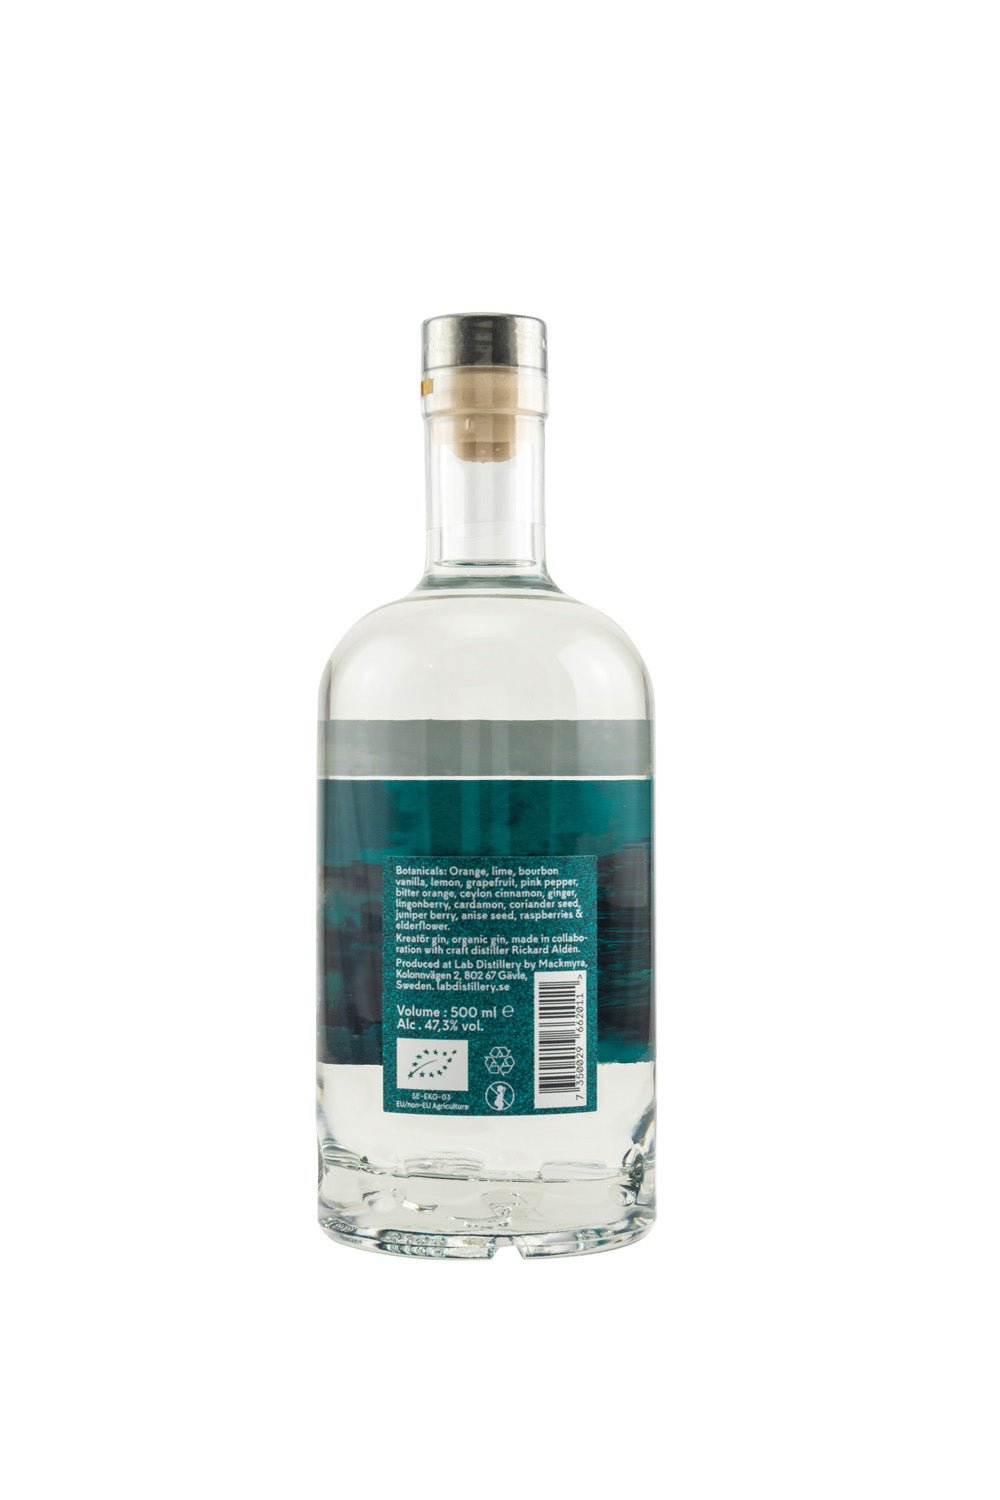 Mackmyra Kreatör Gin 47,3% vol. 500ml - Maltimore